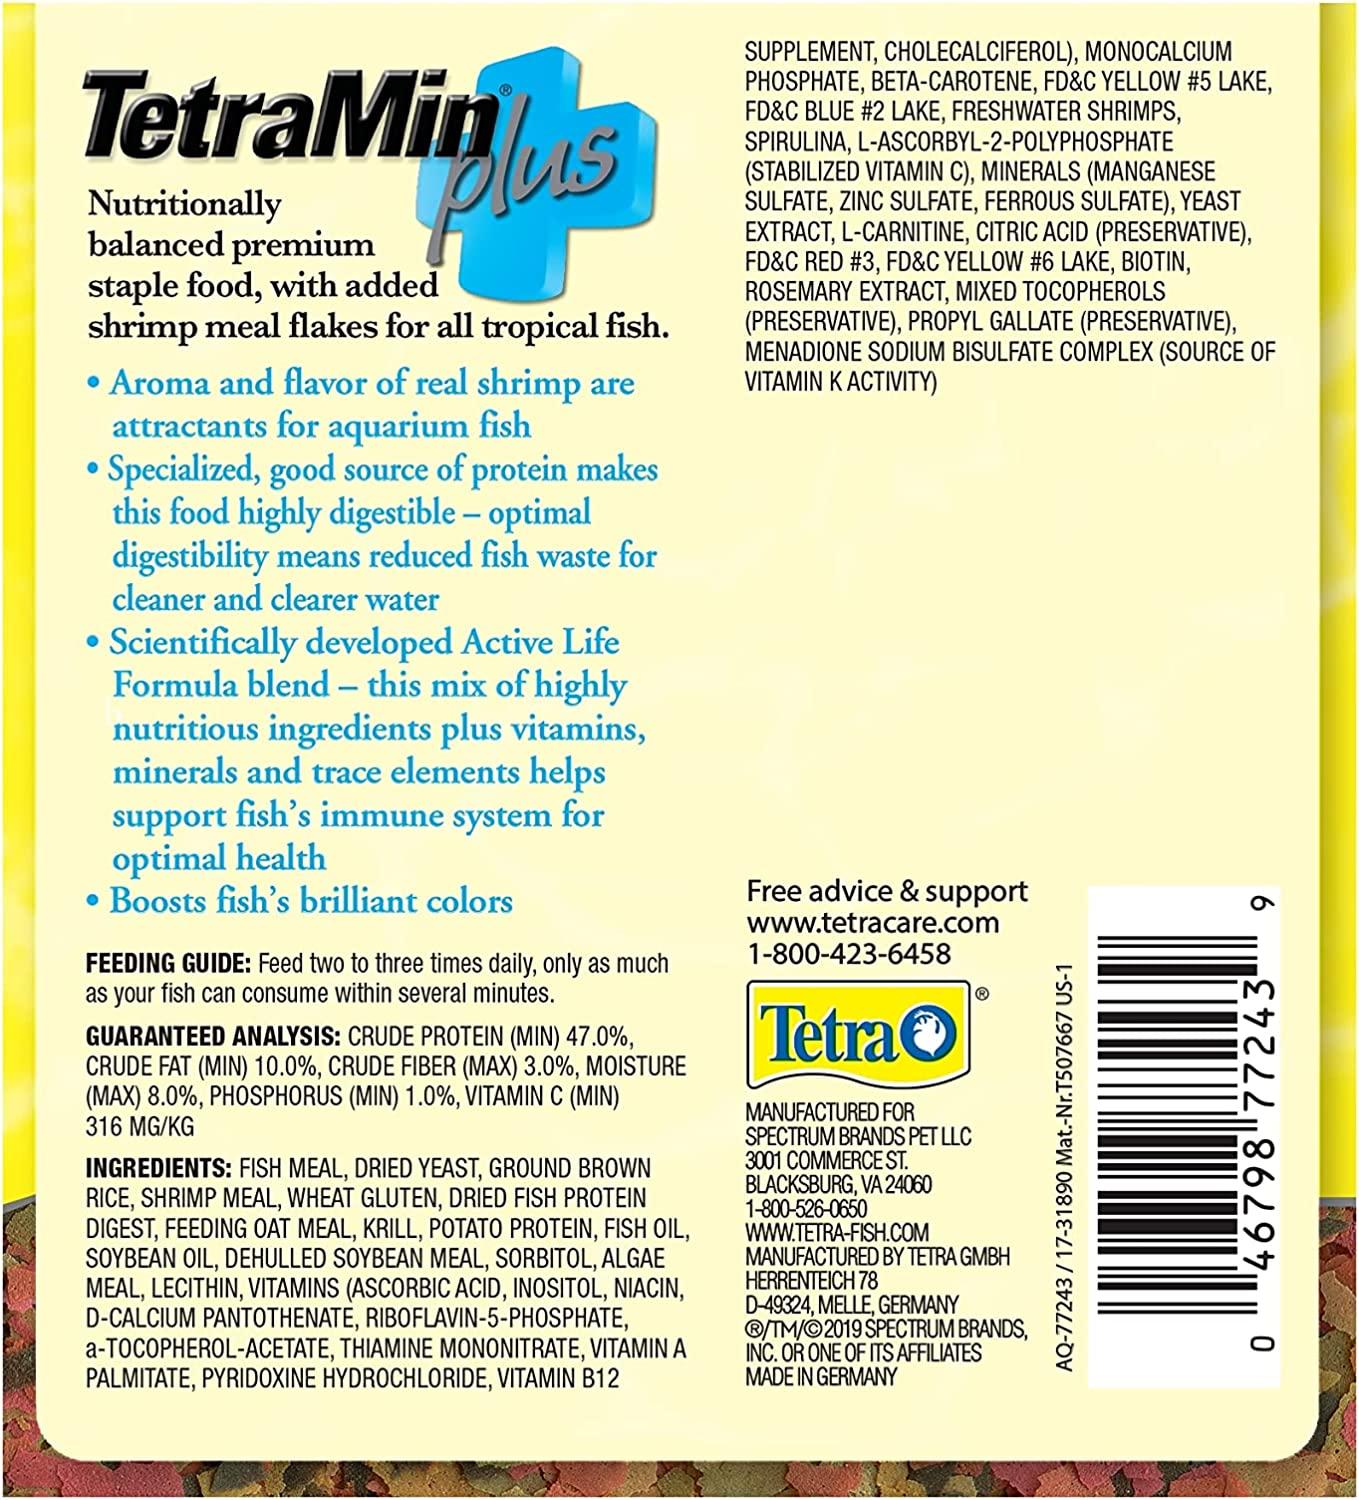 TetraMin: Tetra